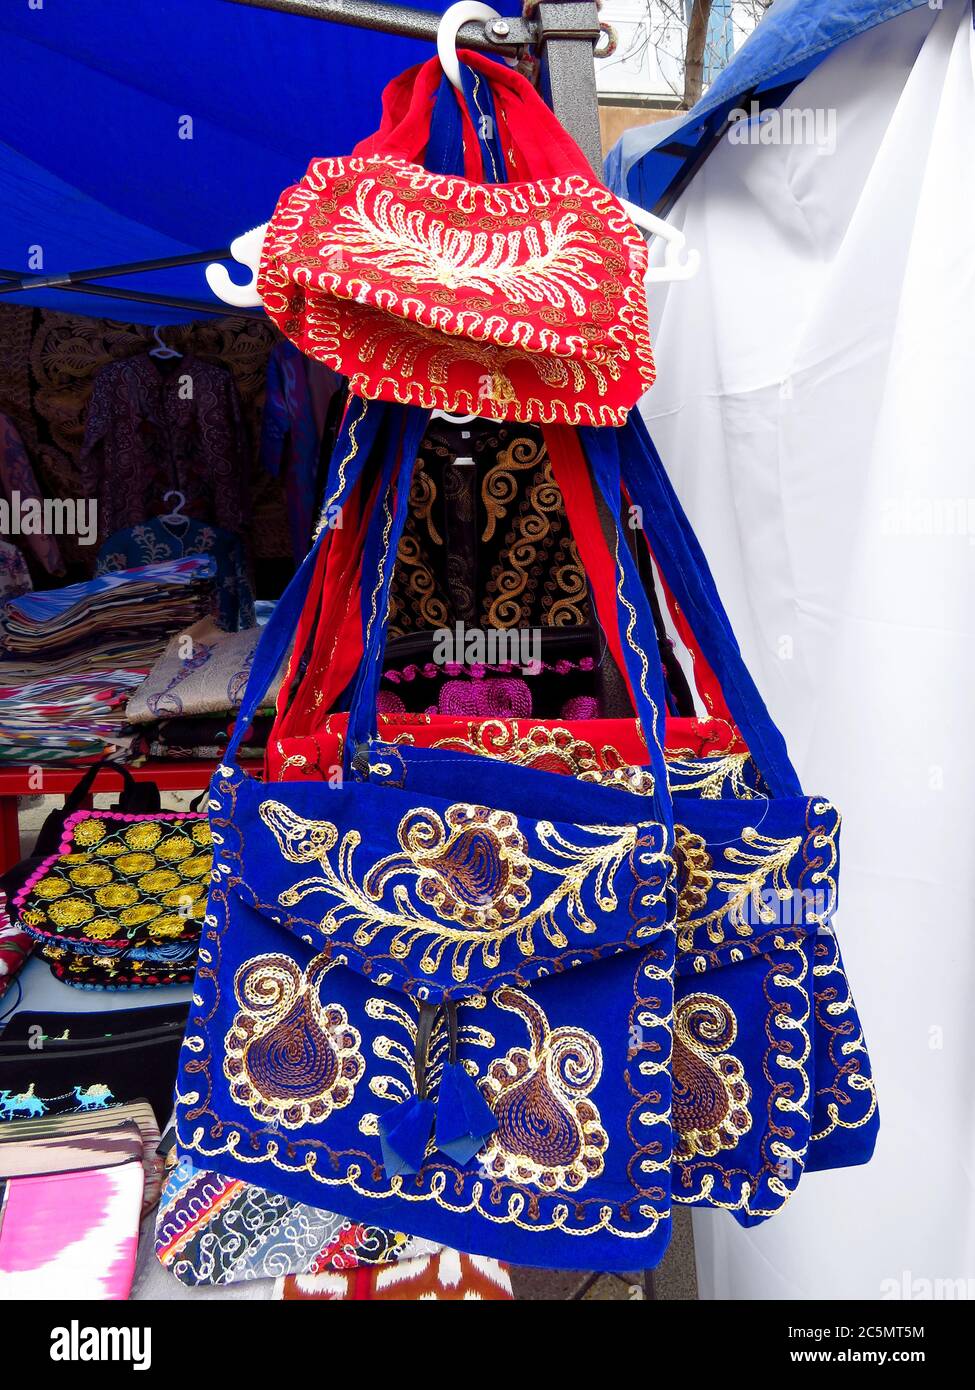 Traditional souvenirs - Kazakh ethnic handbags in street market in Almaty, Kazakhstan Stock Photo